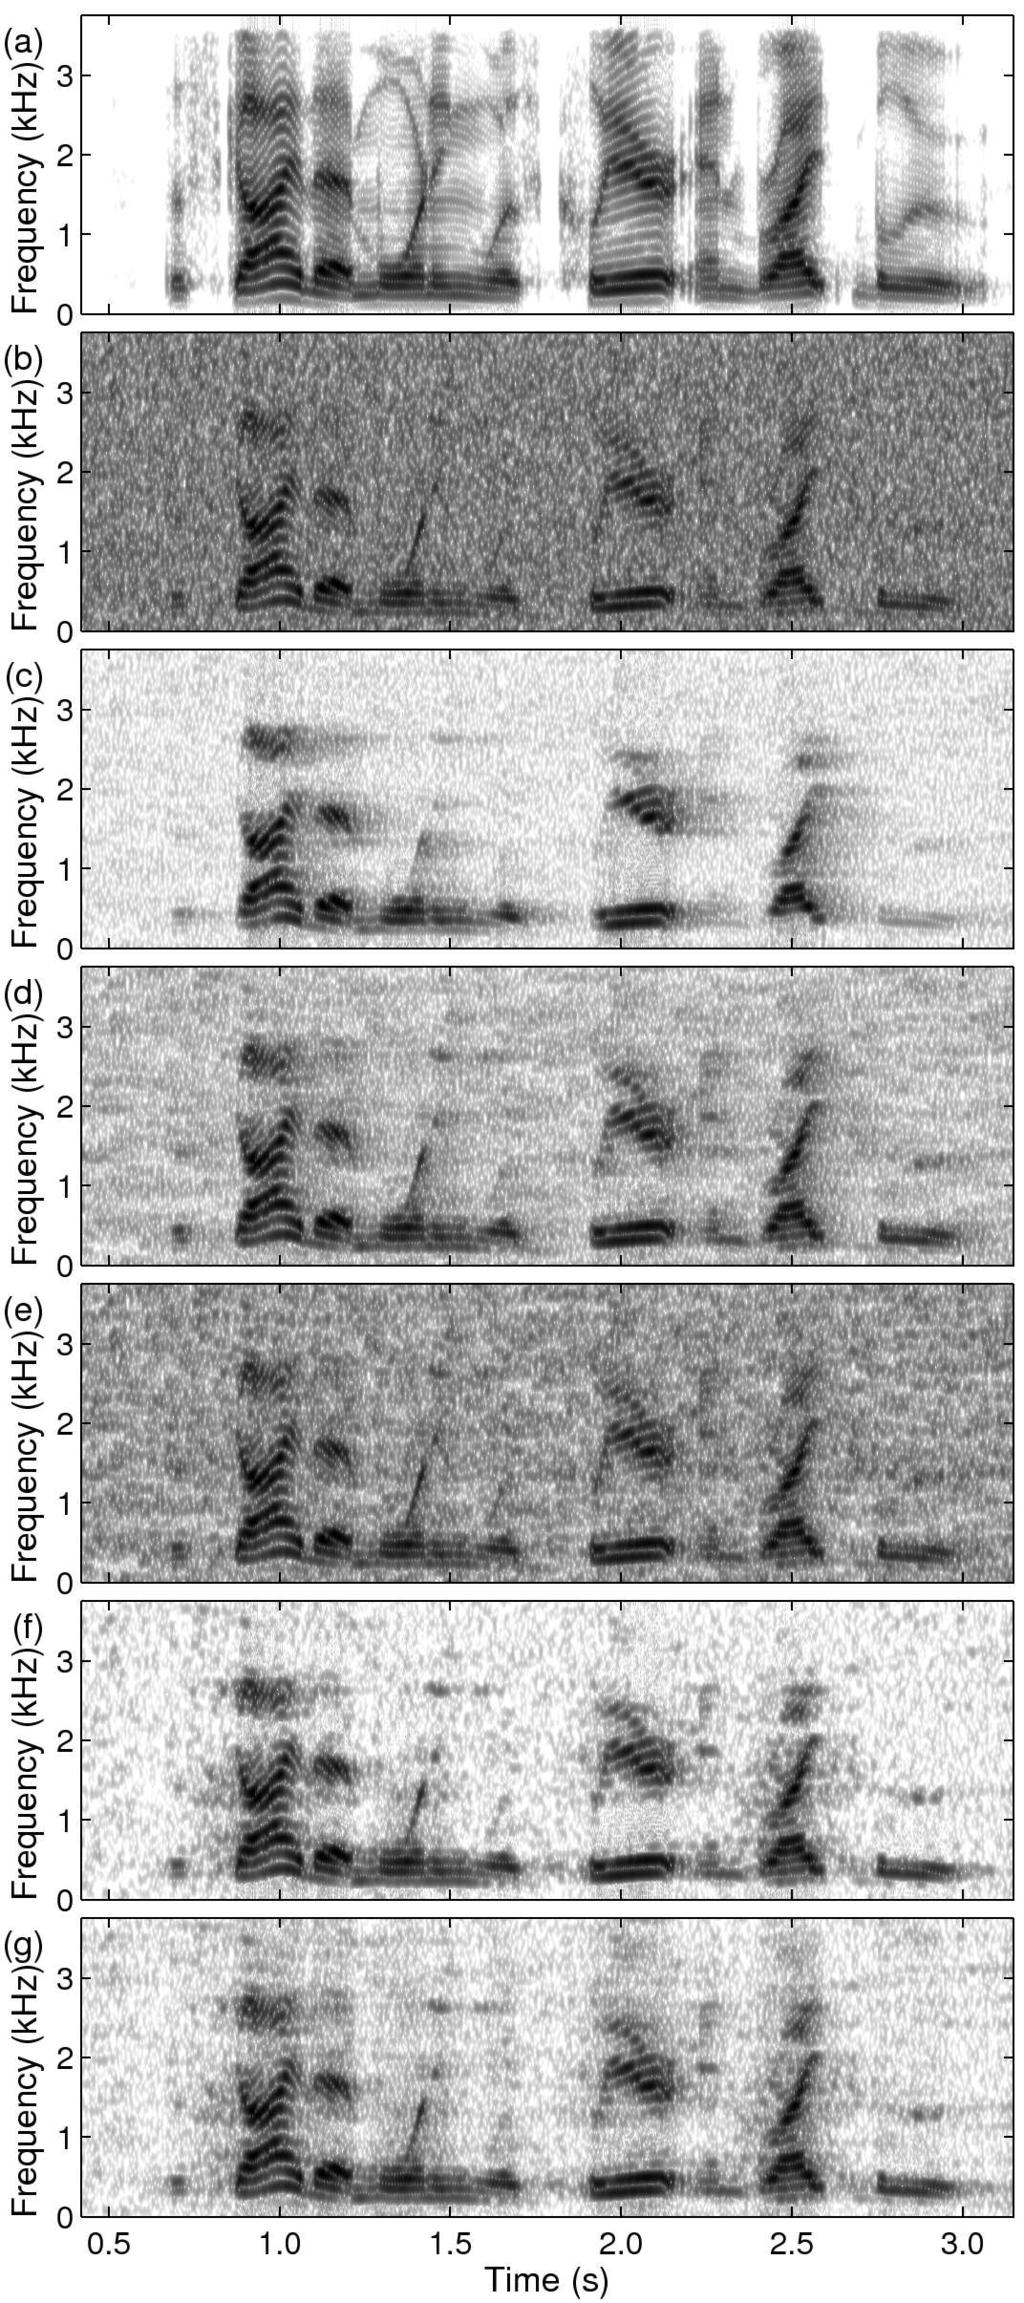 Fig. 24: Spectrograms of sp10 utterance, The sky that morning speech corpus: (a) clean speech (PESQ: 4.50); (b) speech degraded by AWGN at 5 db SNR (PESQ: 1.